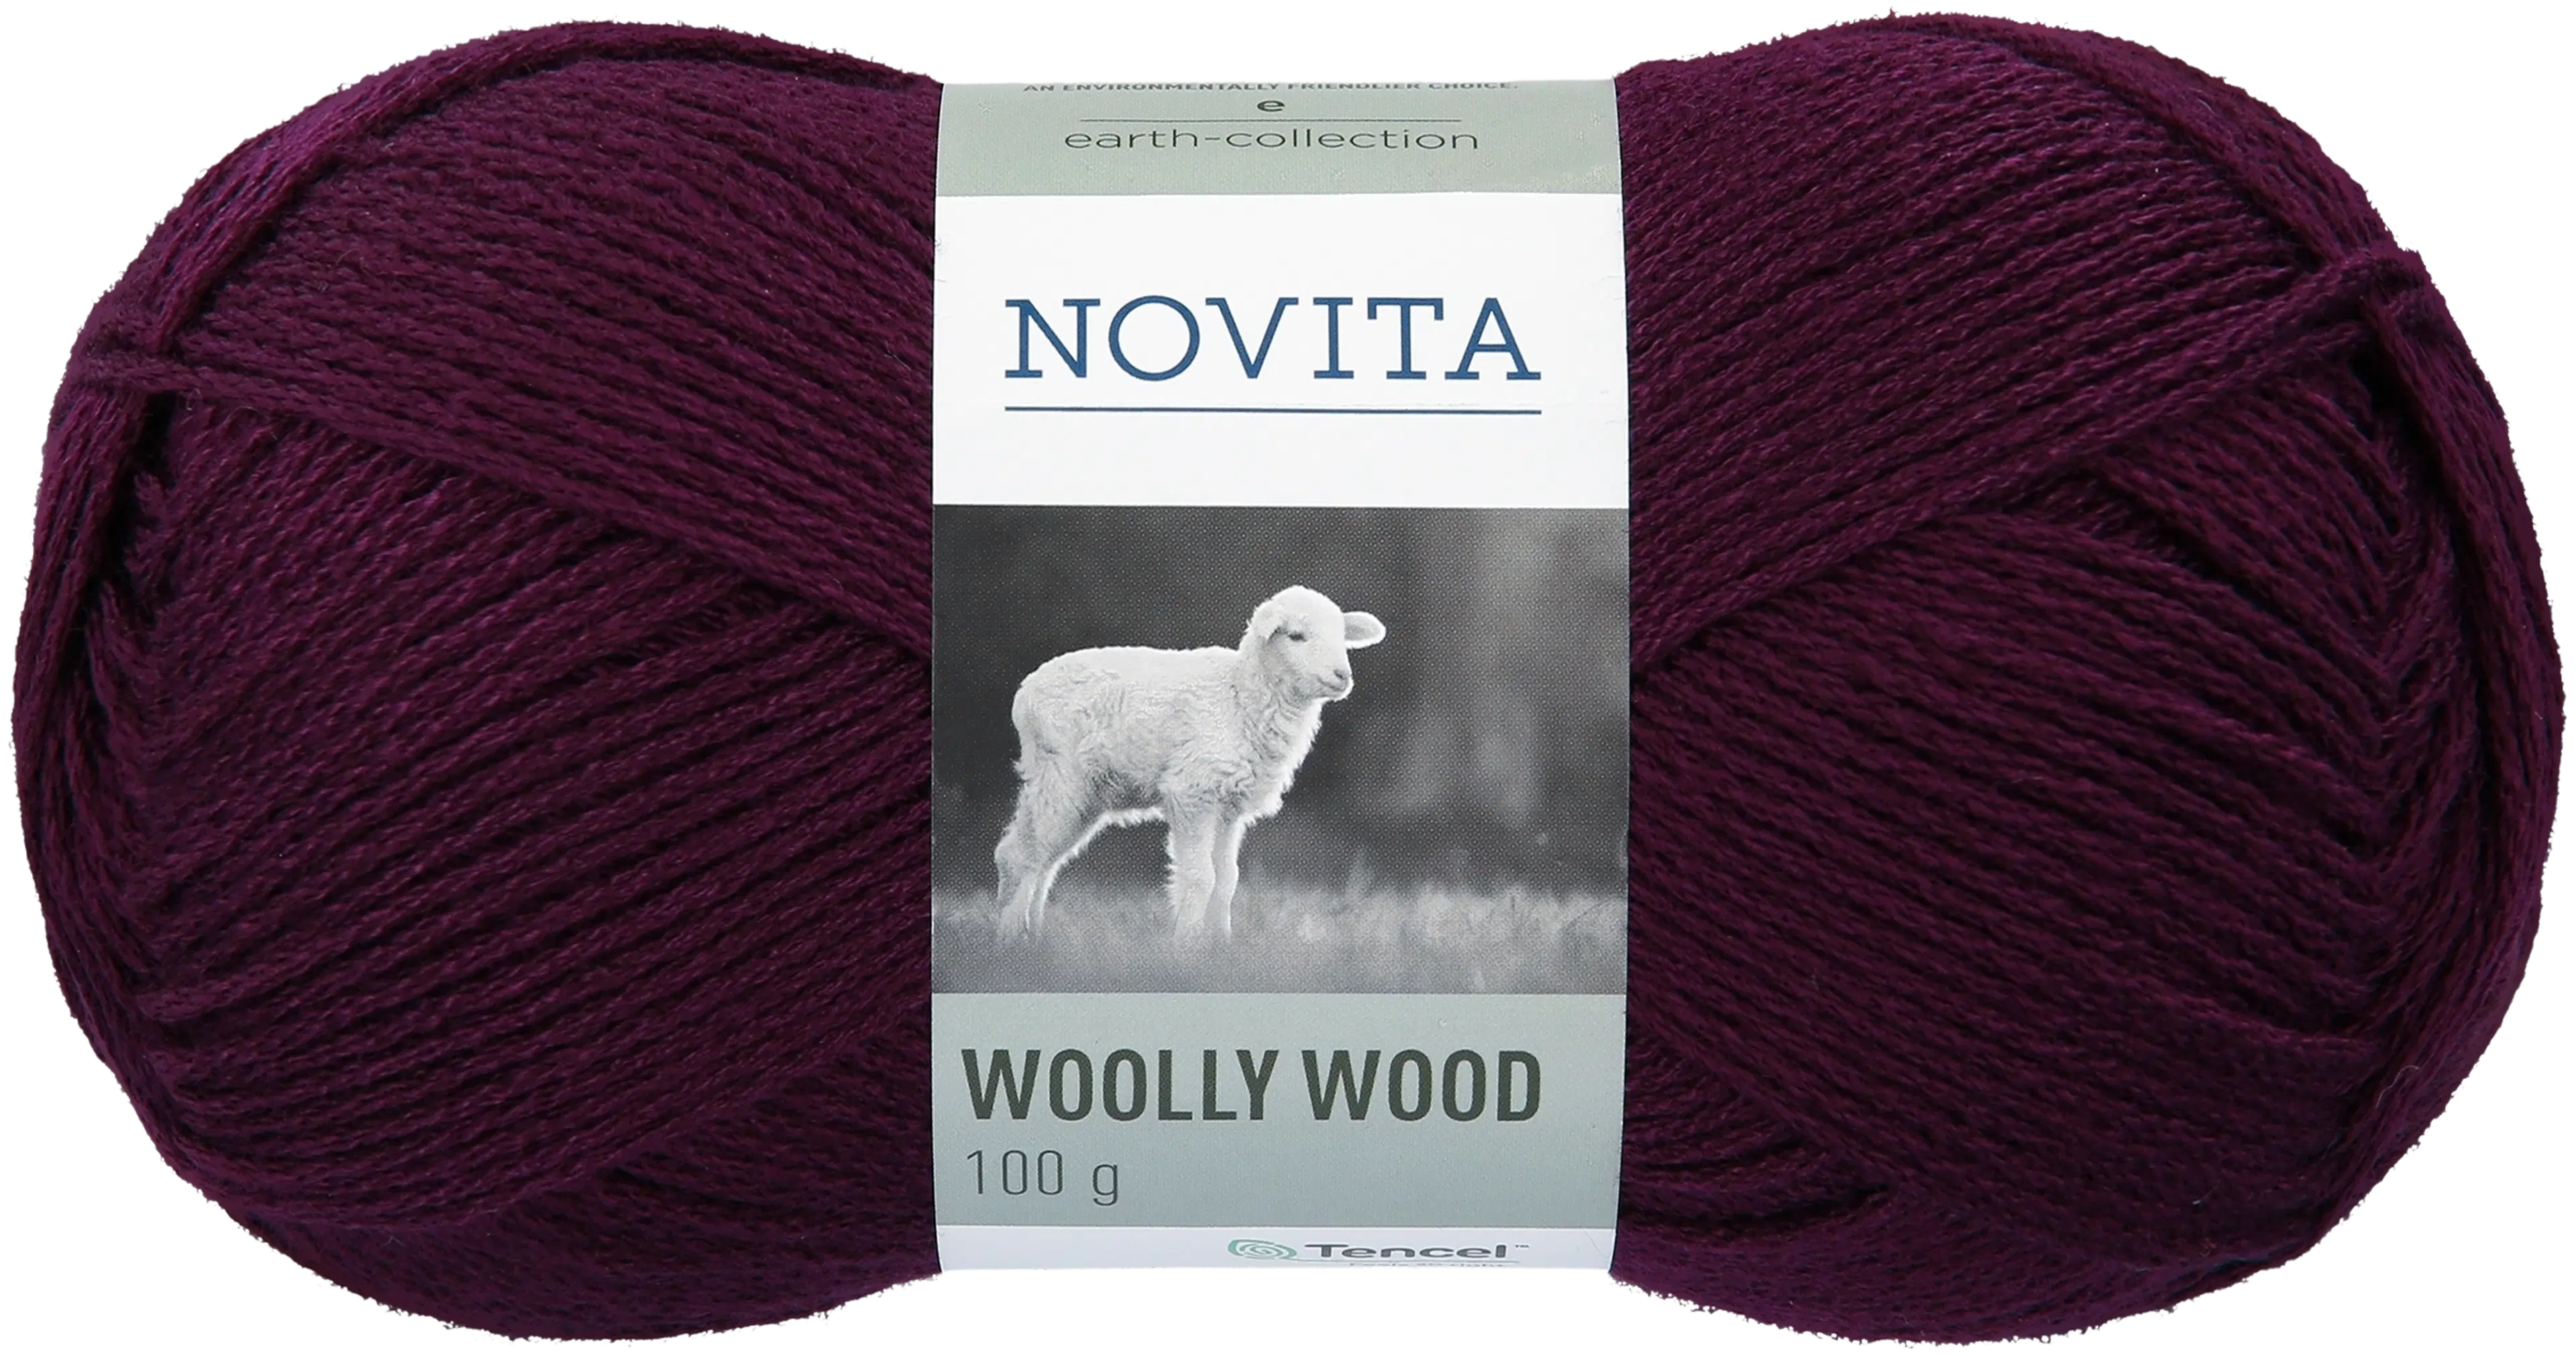 Novita Lanka Woolly Wood 100g 596